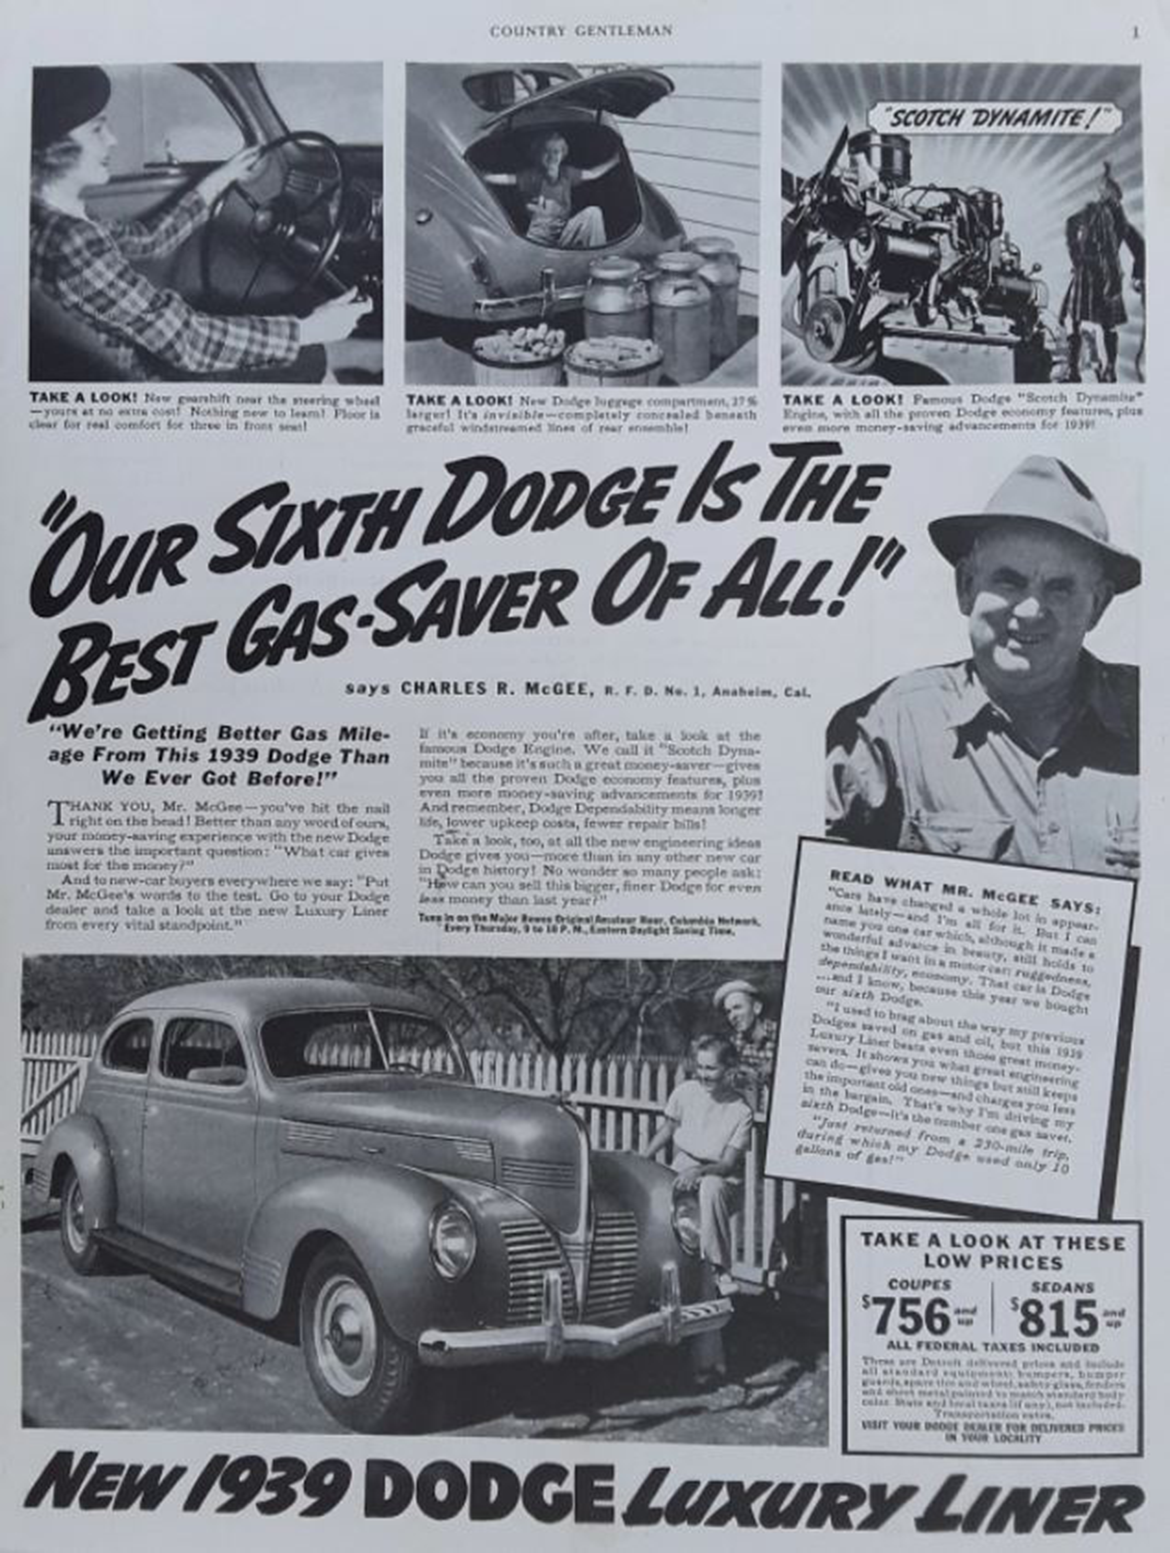 Old Dodge advertisement